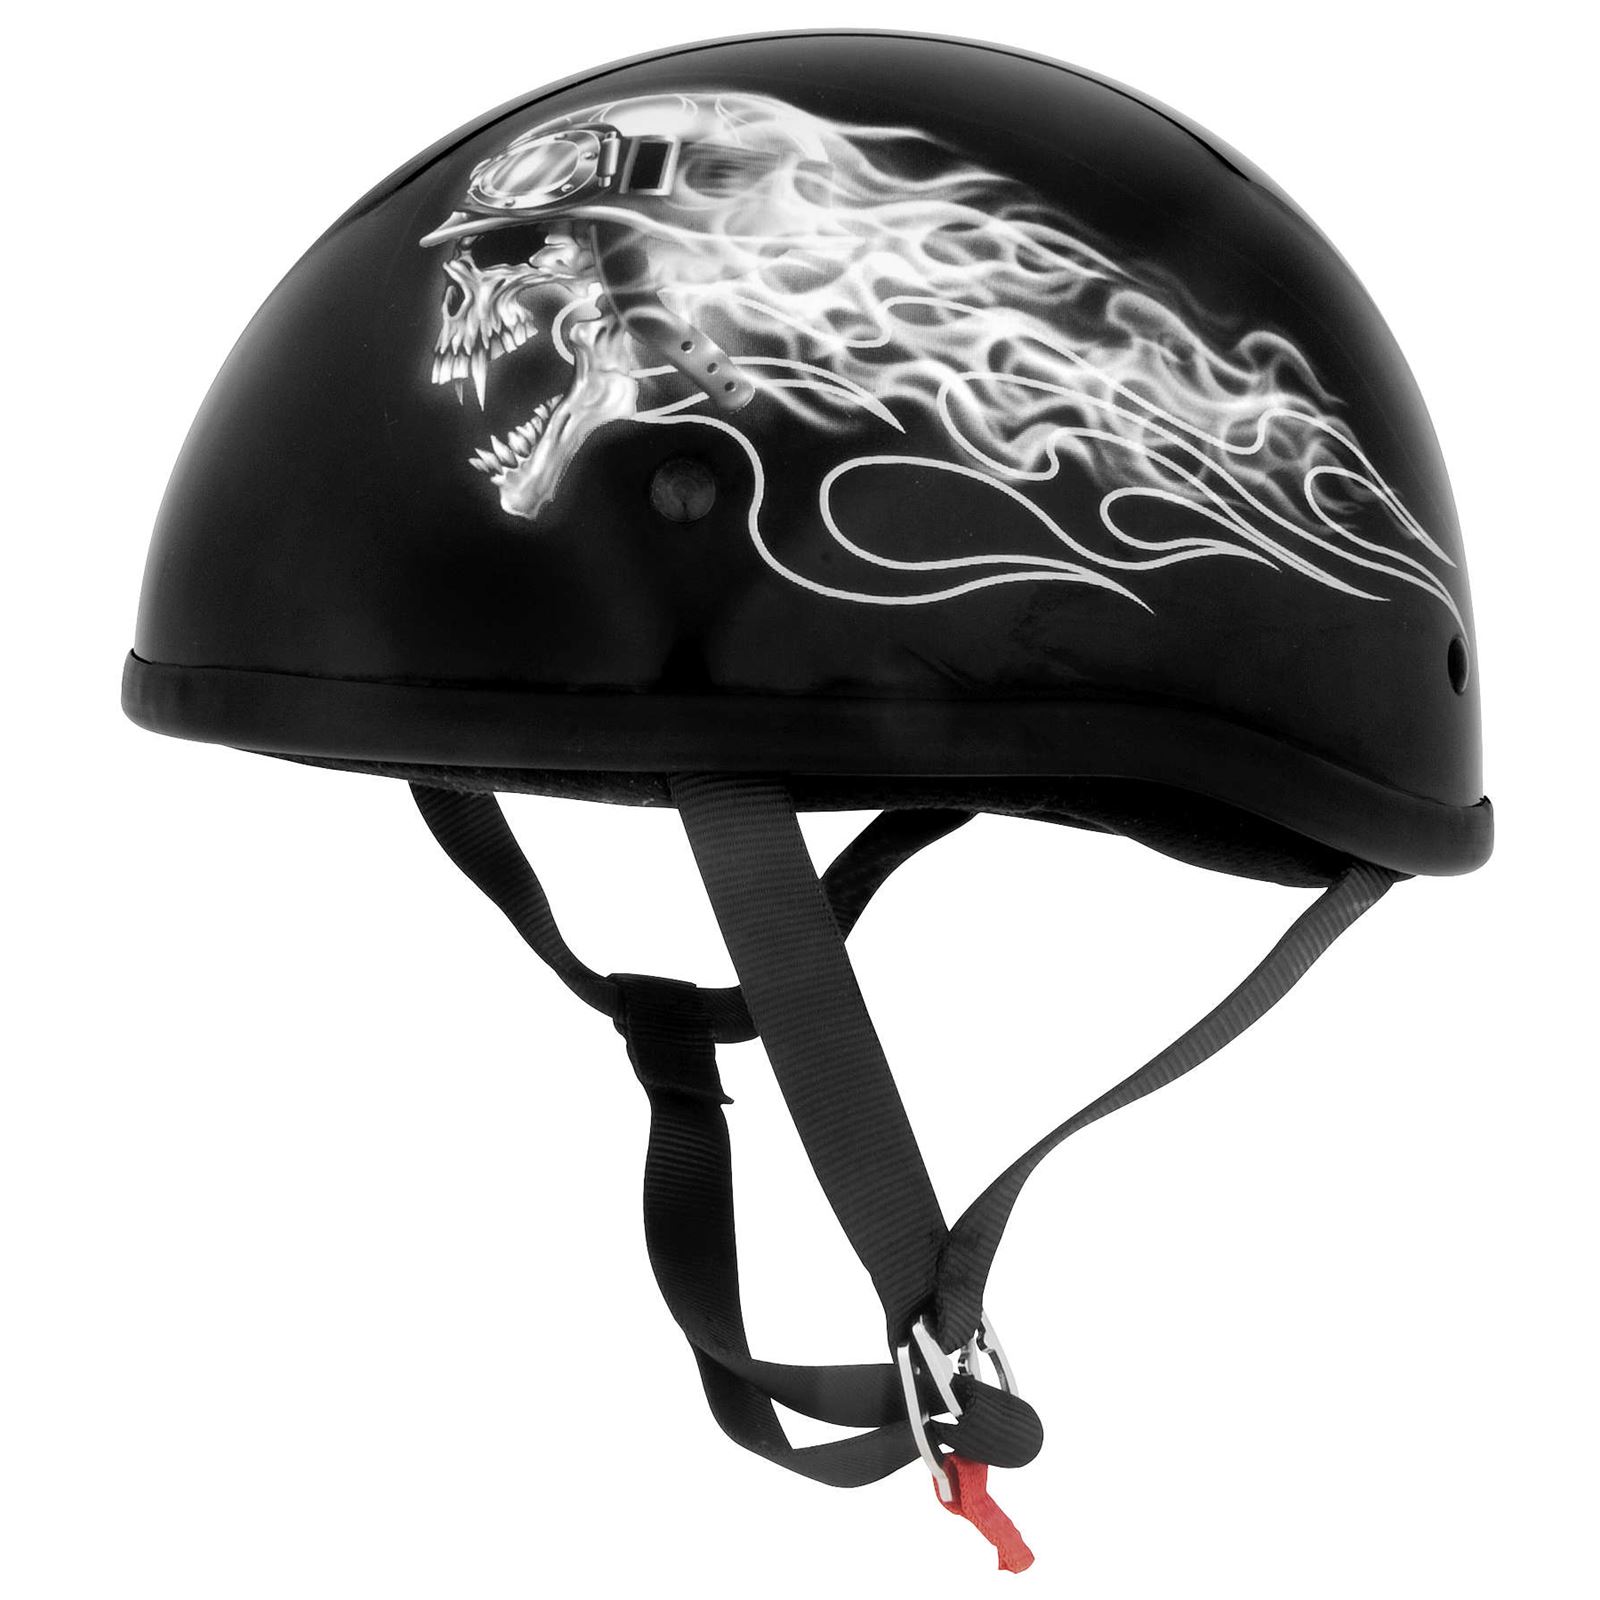 Skid Lid Helmets Original Lethal Threat Biker Skull Helmet - Black/White - Large